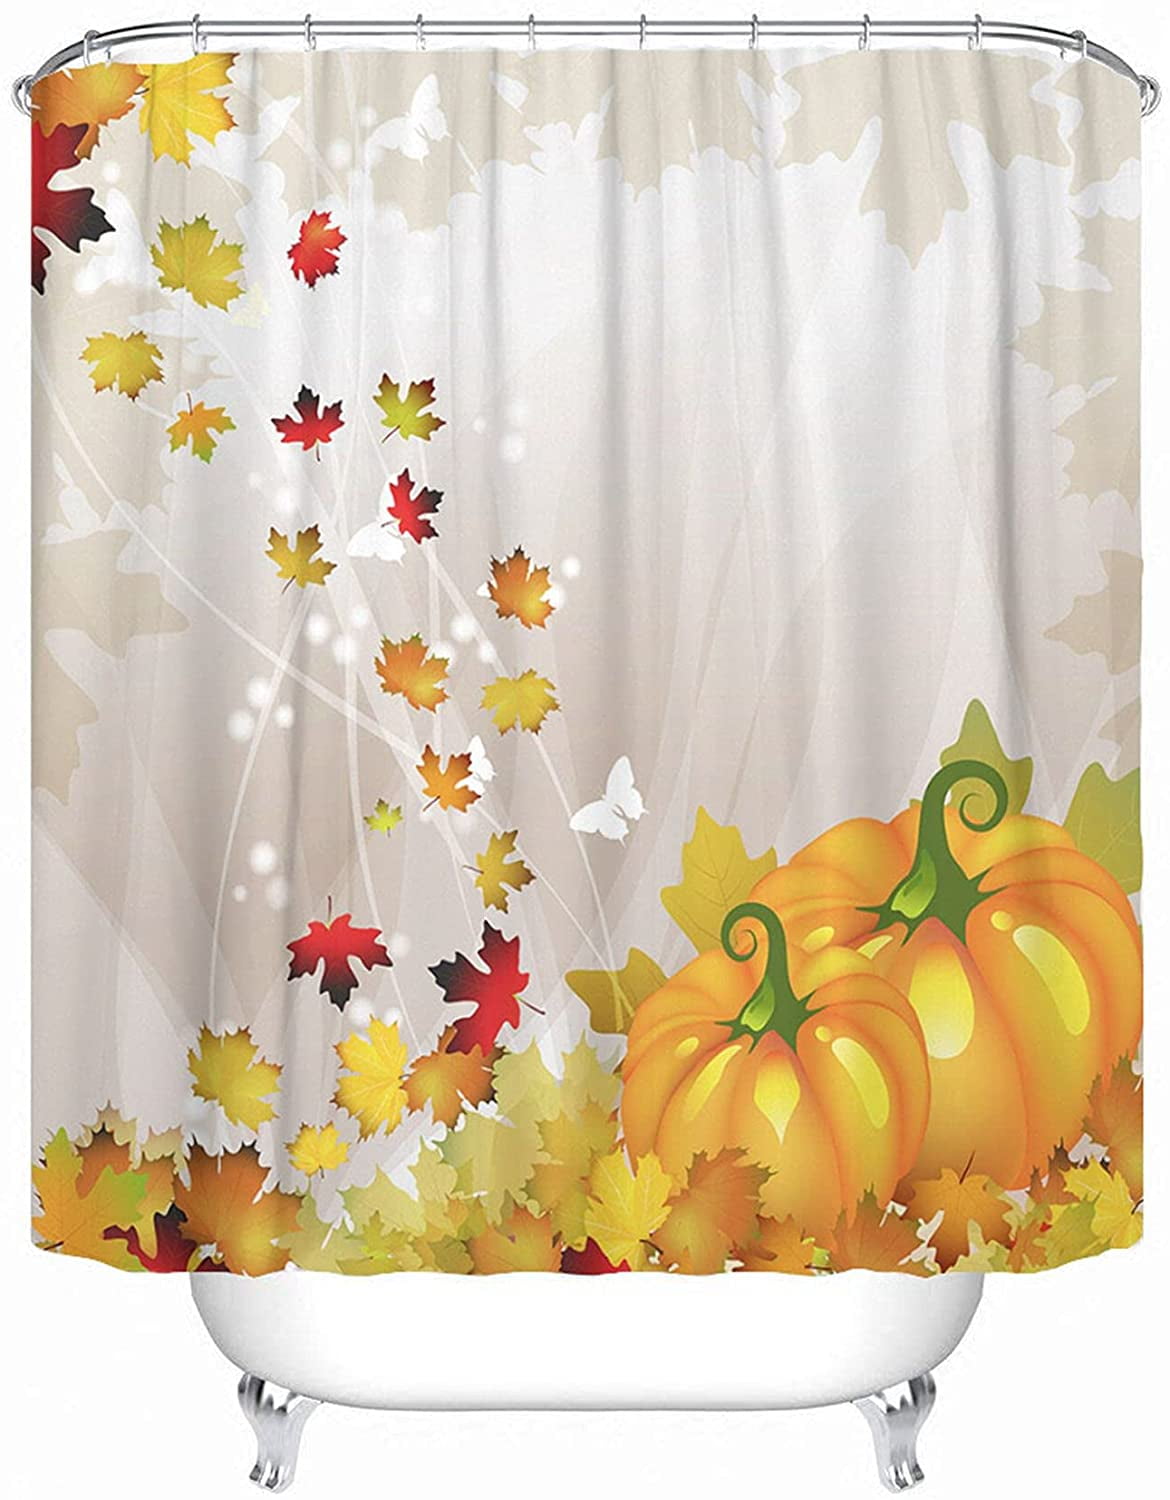 Sketch Autumn Fall Tree Fallen Leaves Waterproof Fabric Shower Curtain Set 72" 